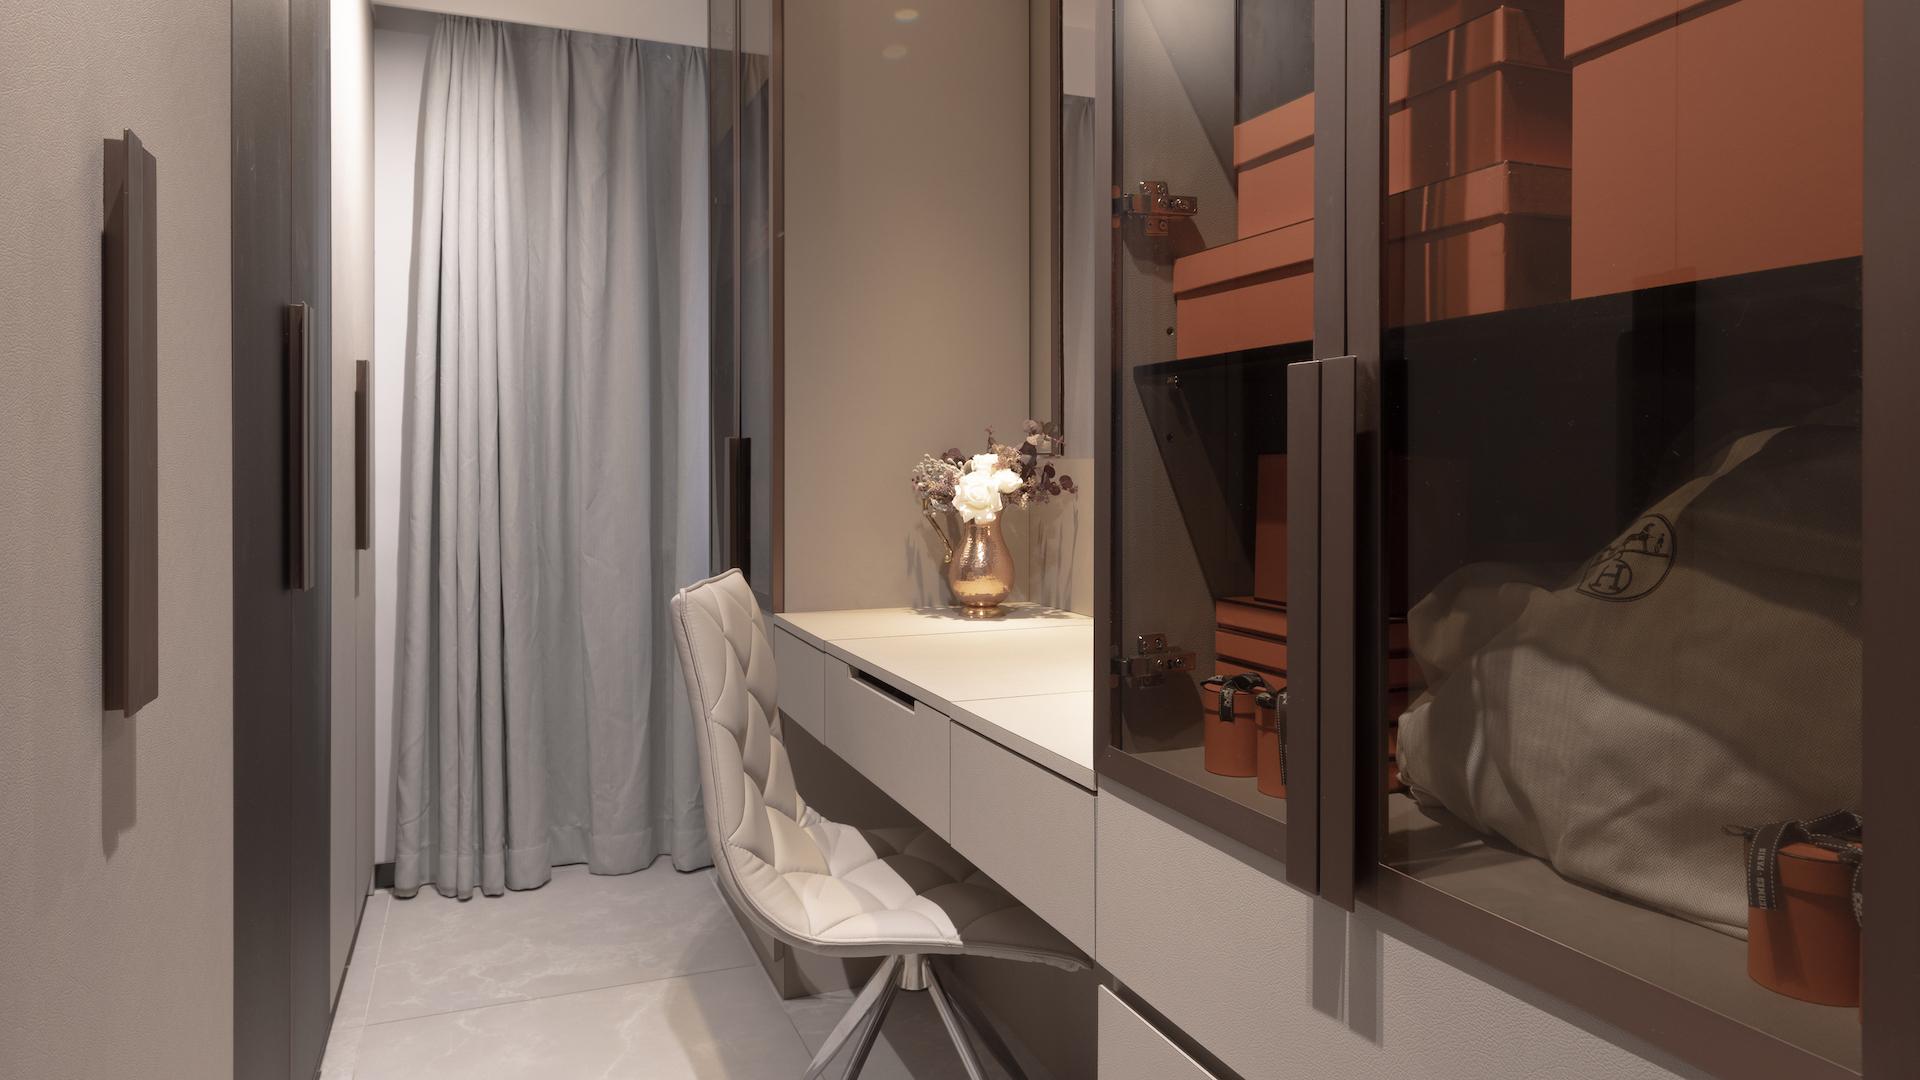 VirtuouS Interiors Crafts a Stylish Hong Kong Abode with Shades of Grey